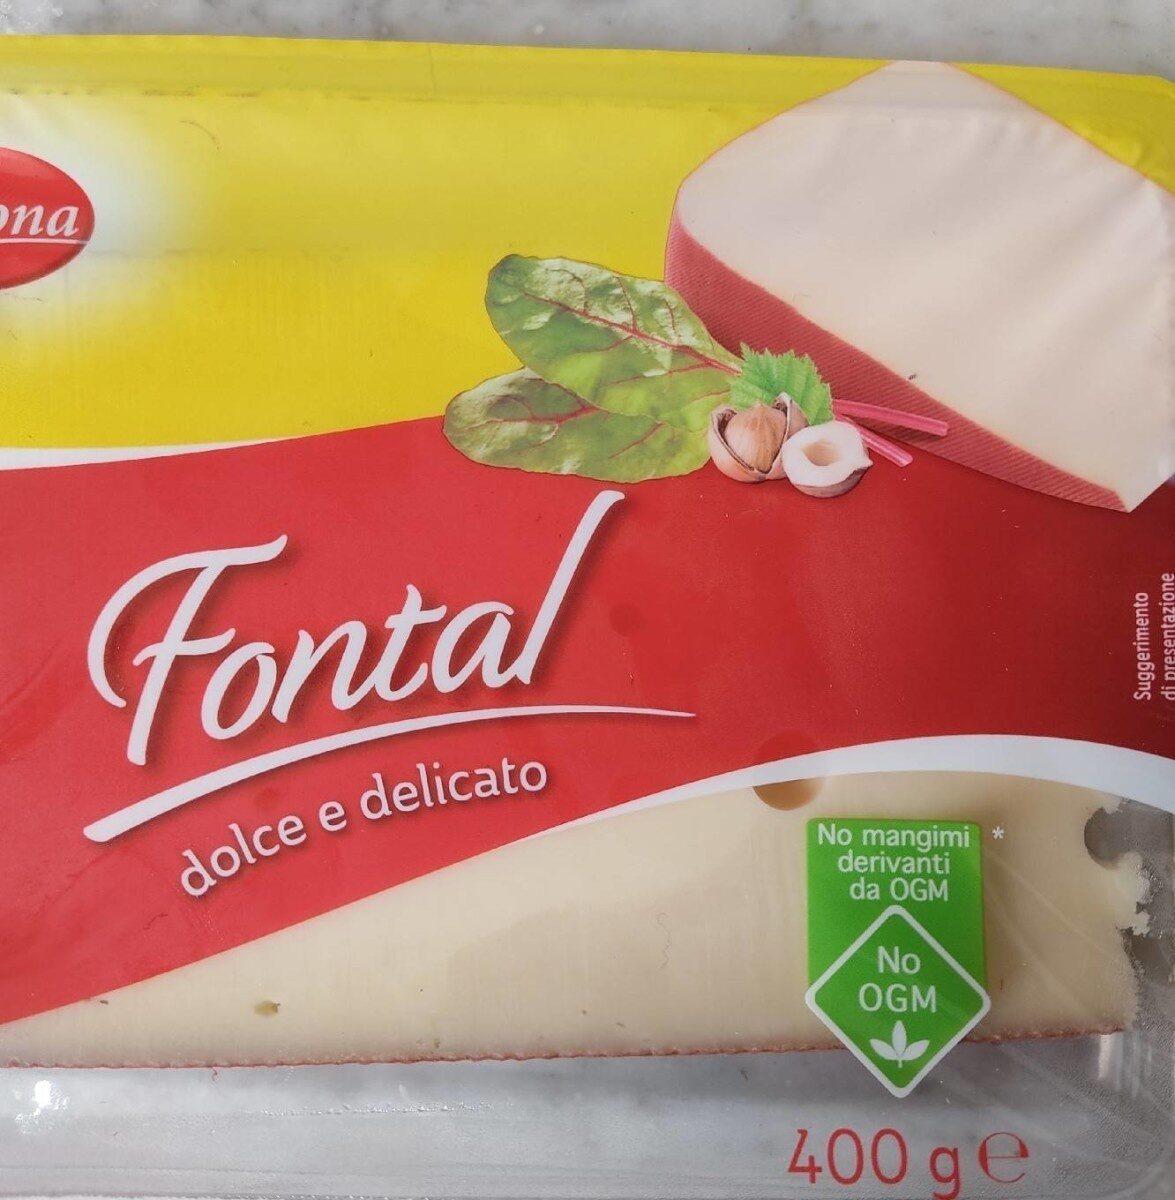 Fontal dolce e delicato - Product - it